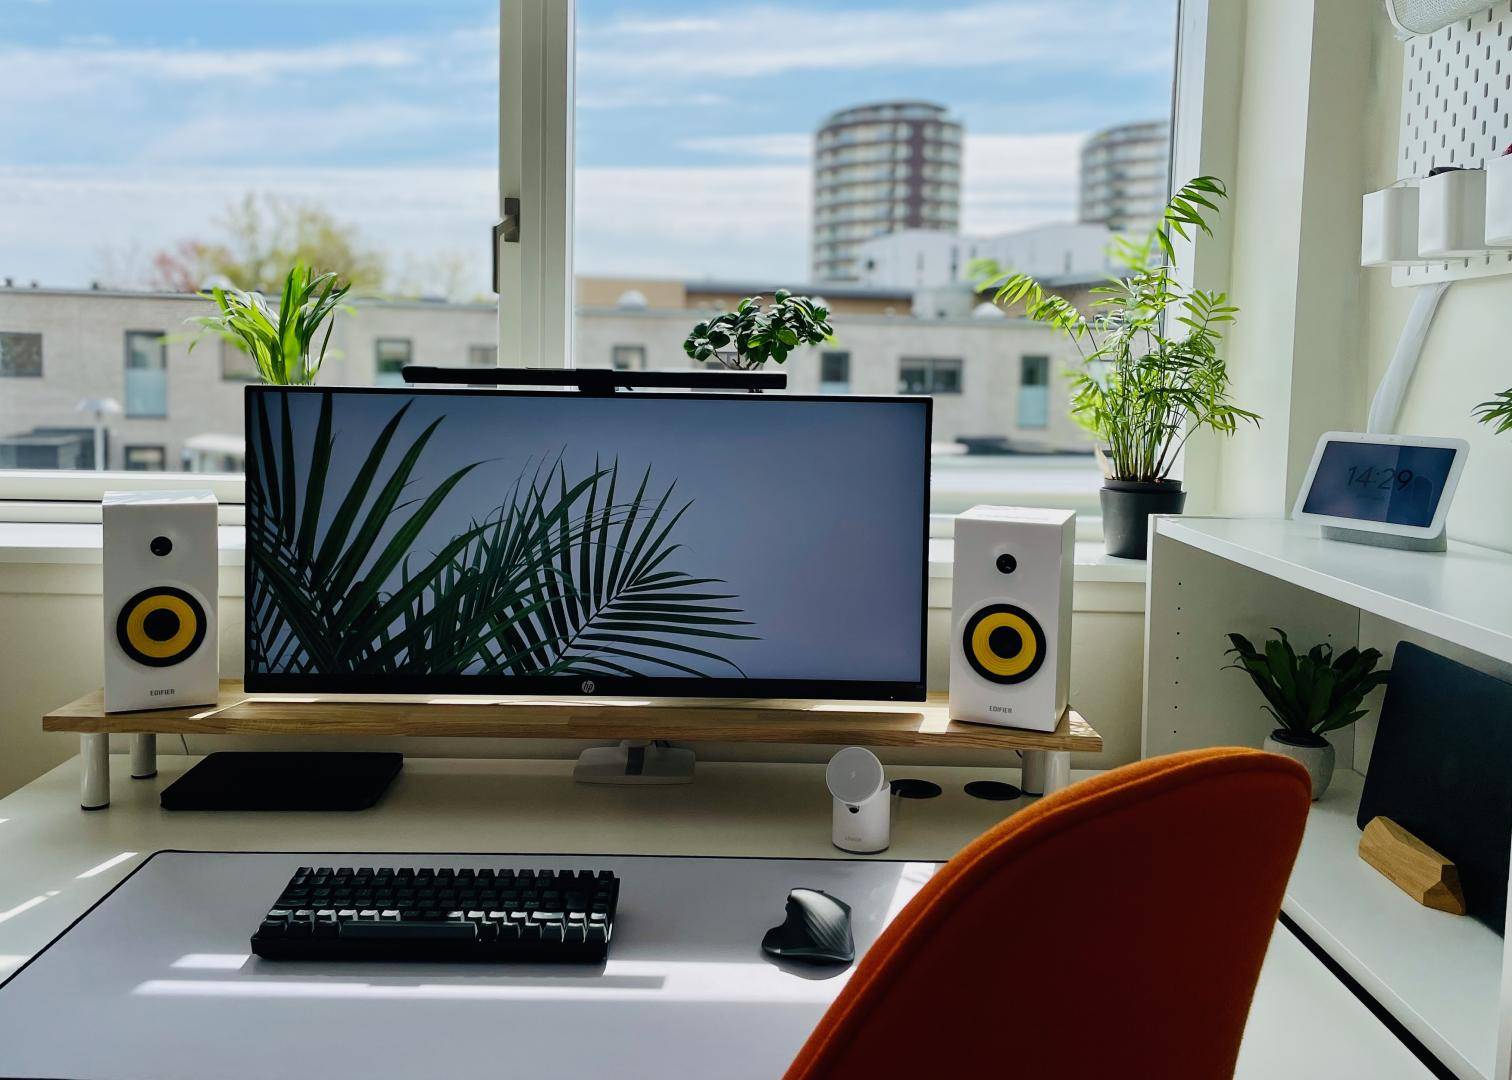 Using a desk shelf with your home office setup - Minimal Desk Setups